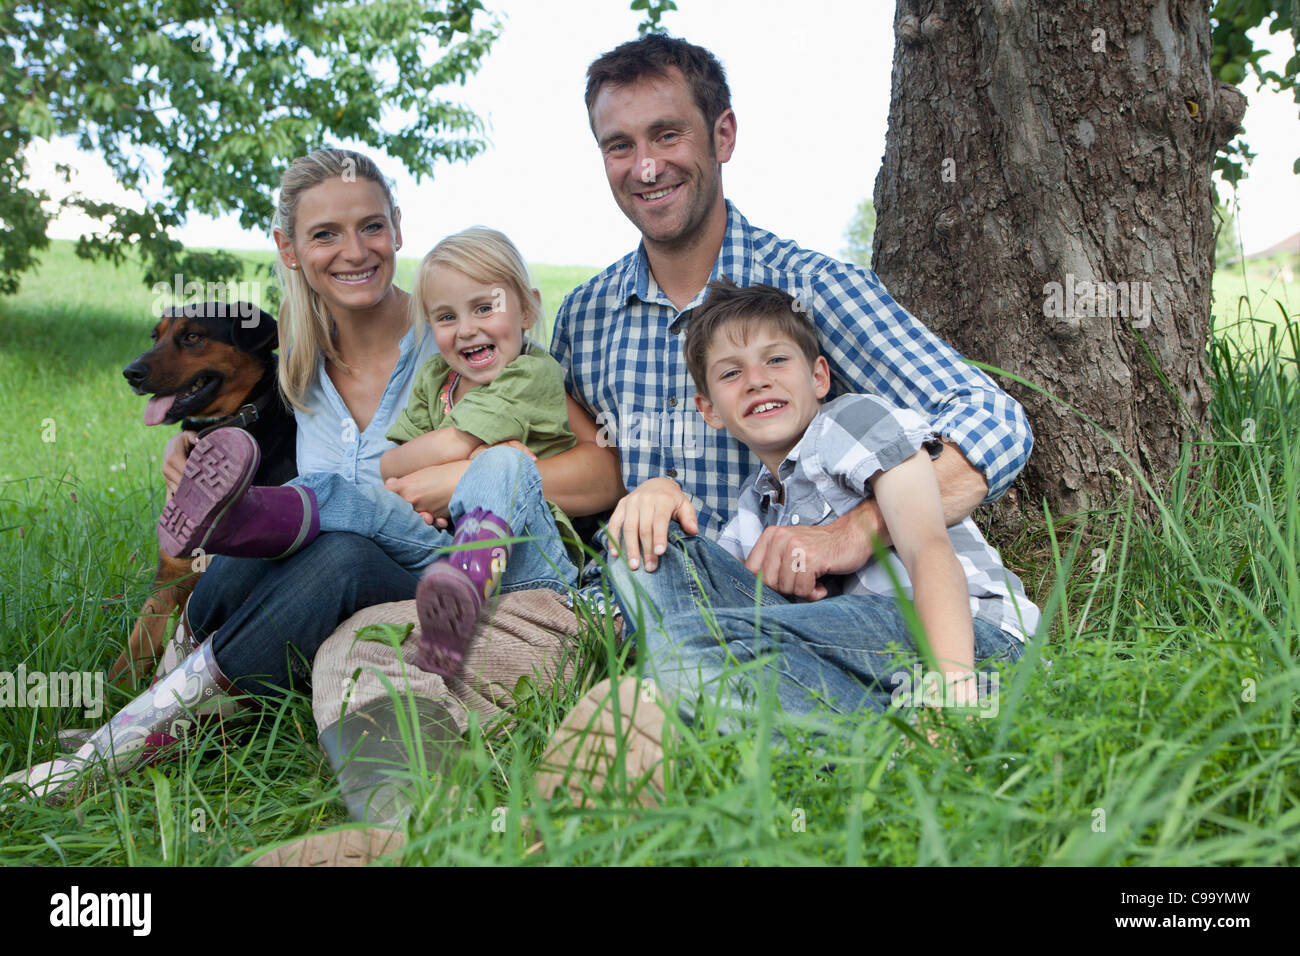 Germany, Bavaria, Altenthann, Family with dog under tree, smiling, portrait Stock Photo